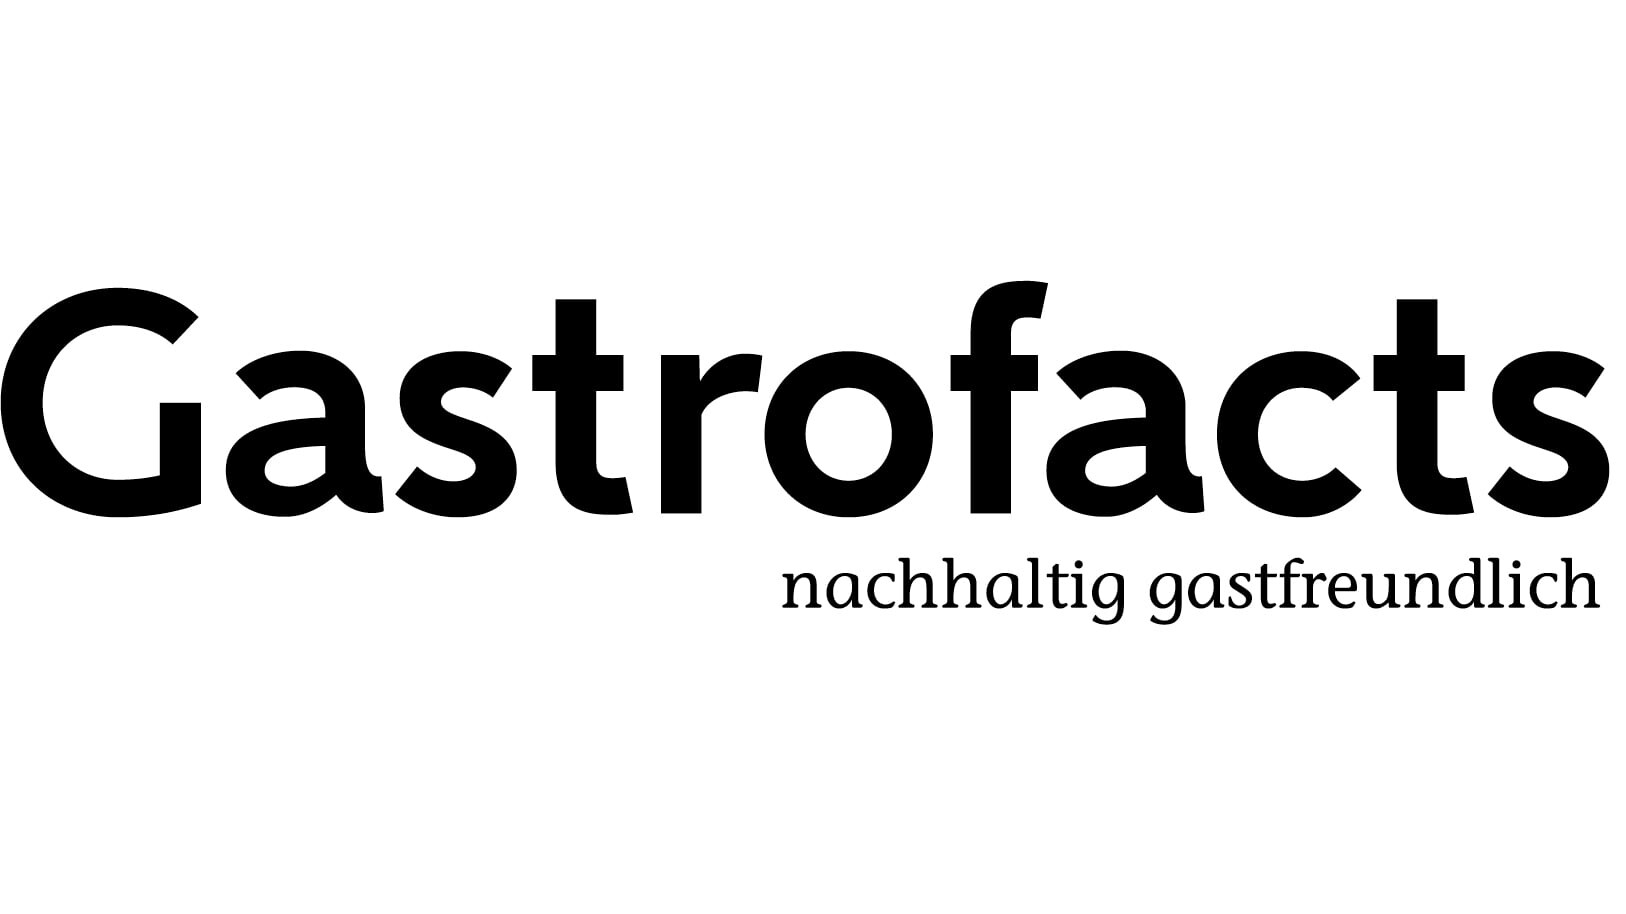 Gastrofacts.jpg (0.1 MB)